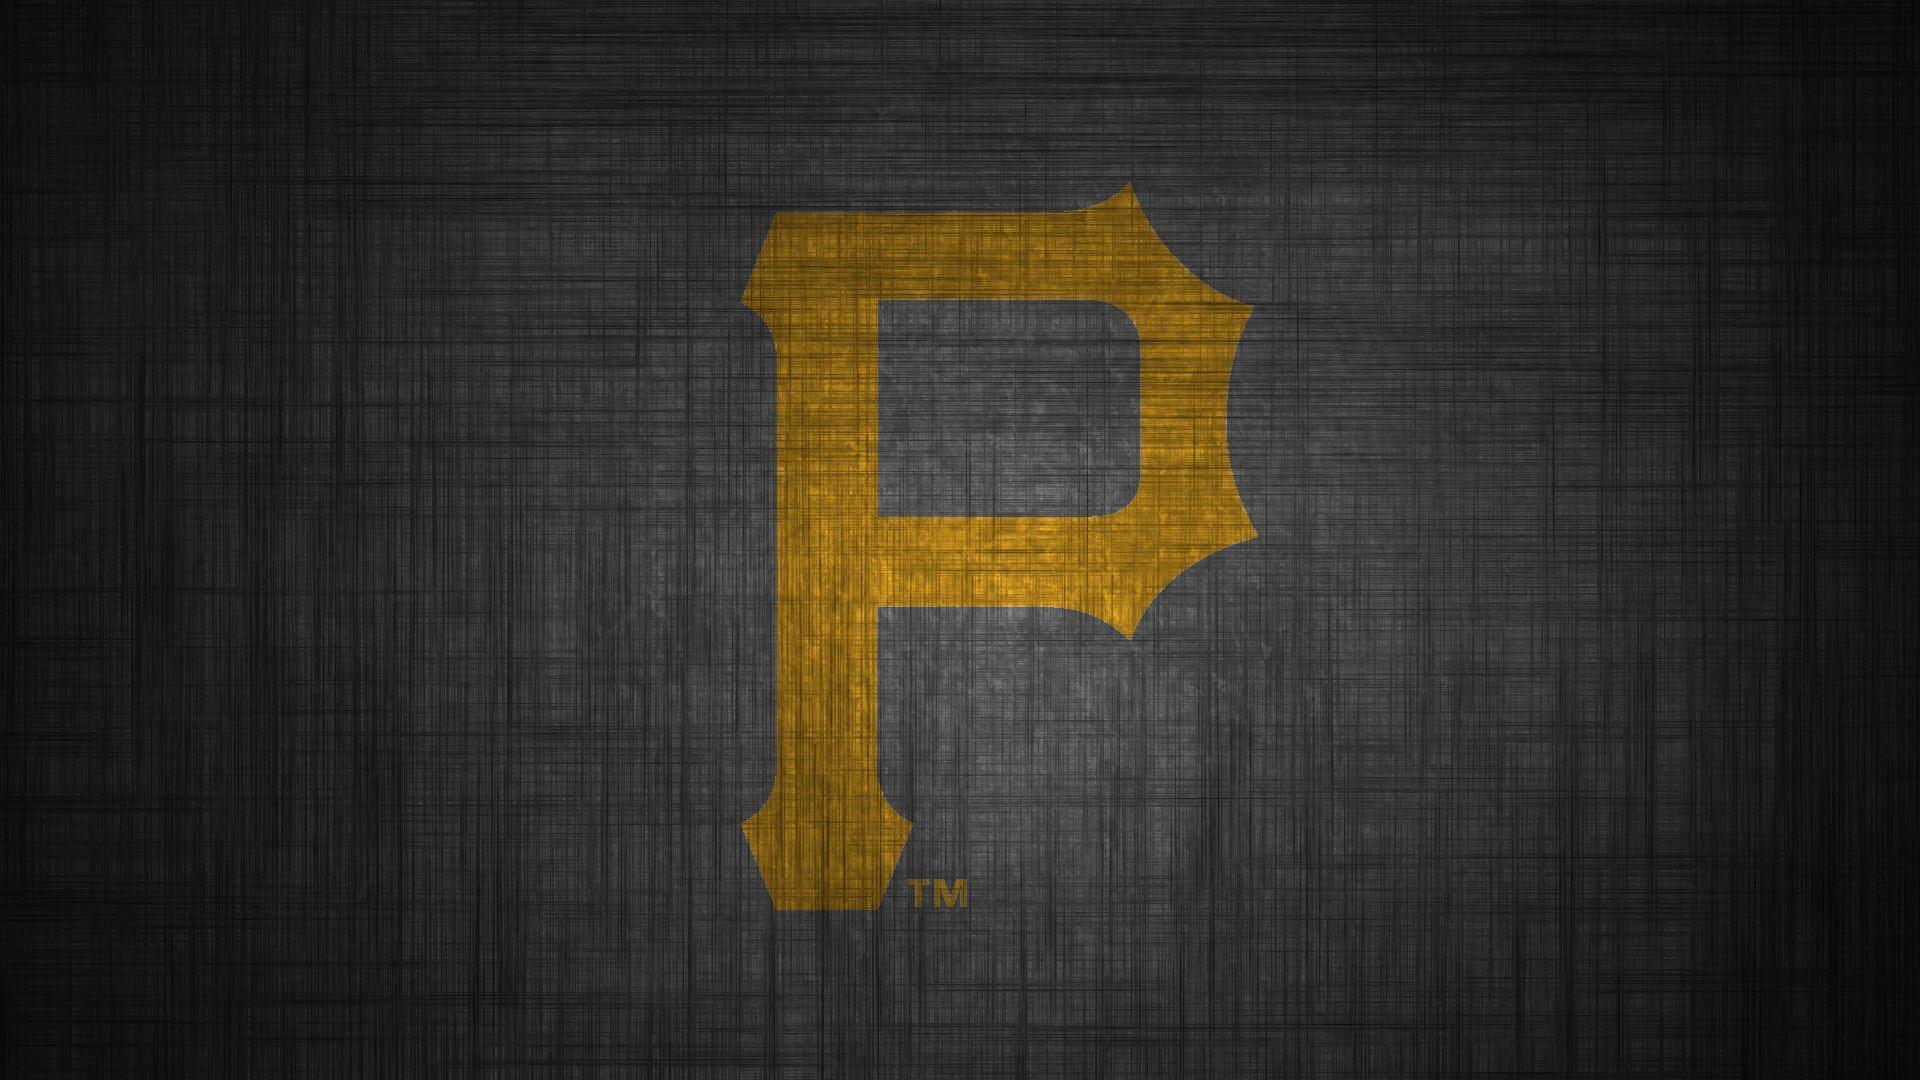 Pittsburgh Pirates wallpaper HD free download